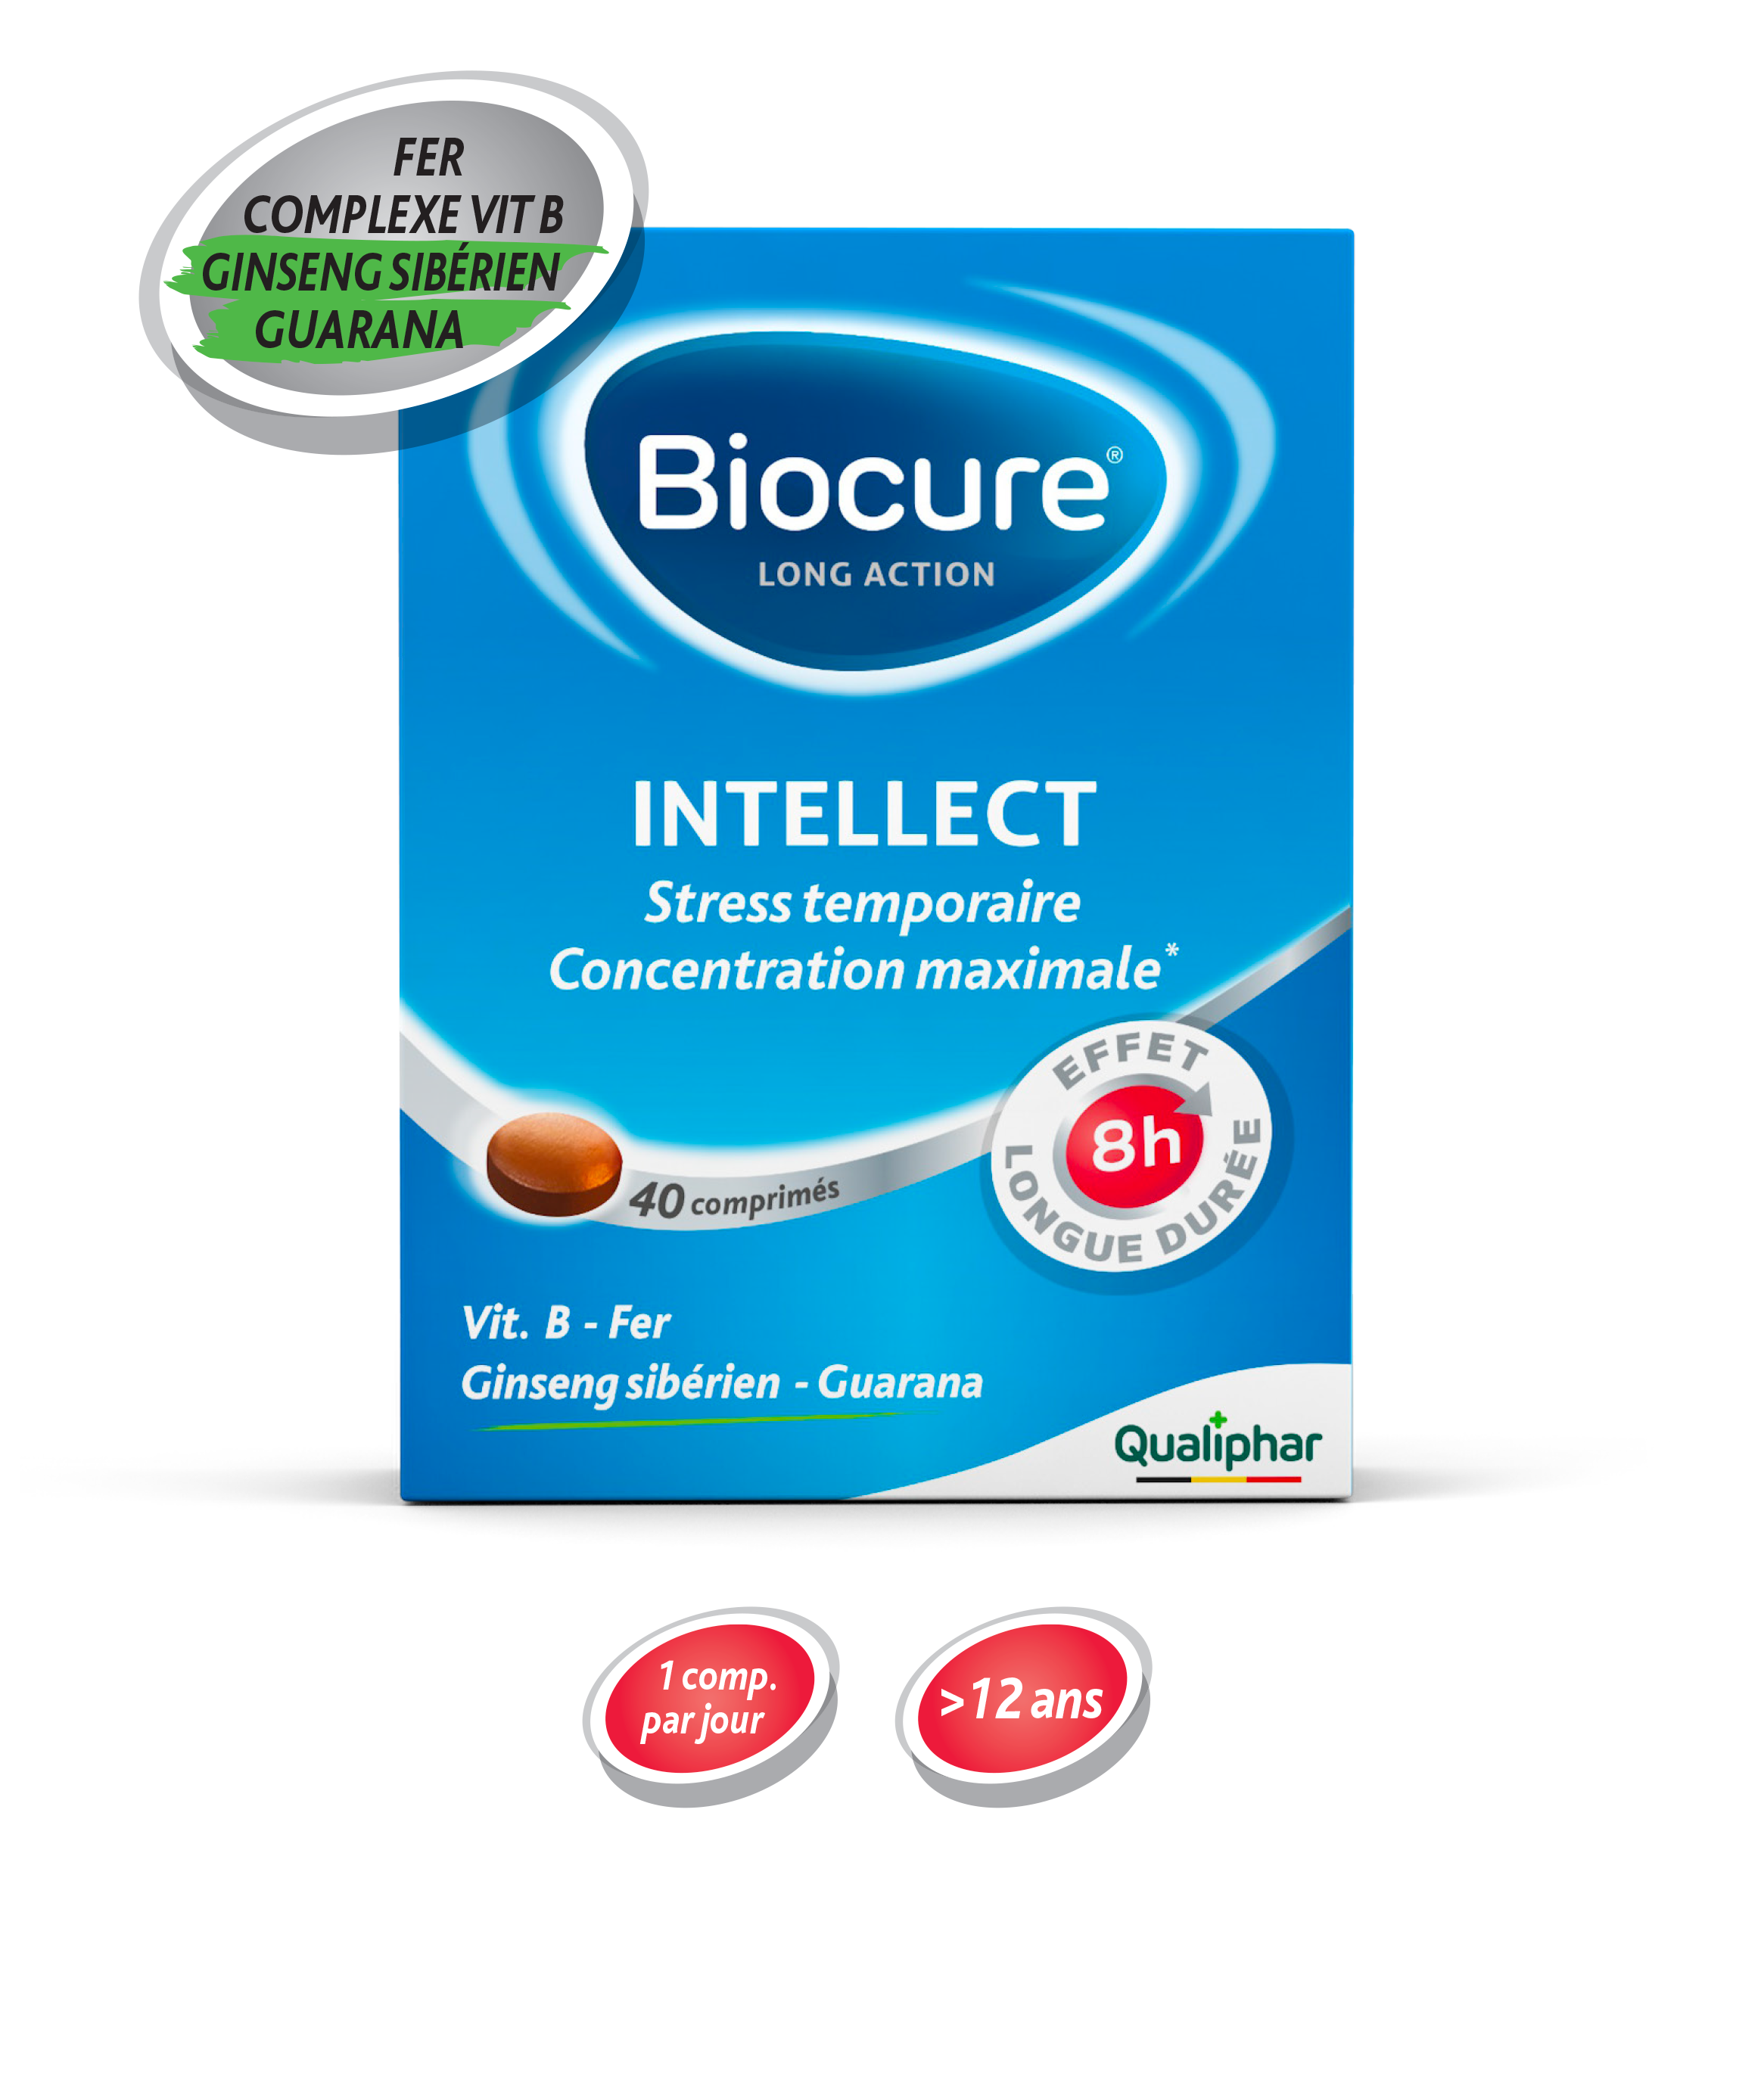 Biocure_INTELLECT_macarons